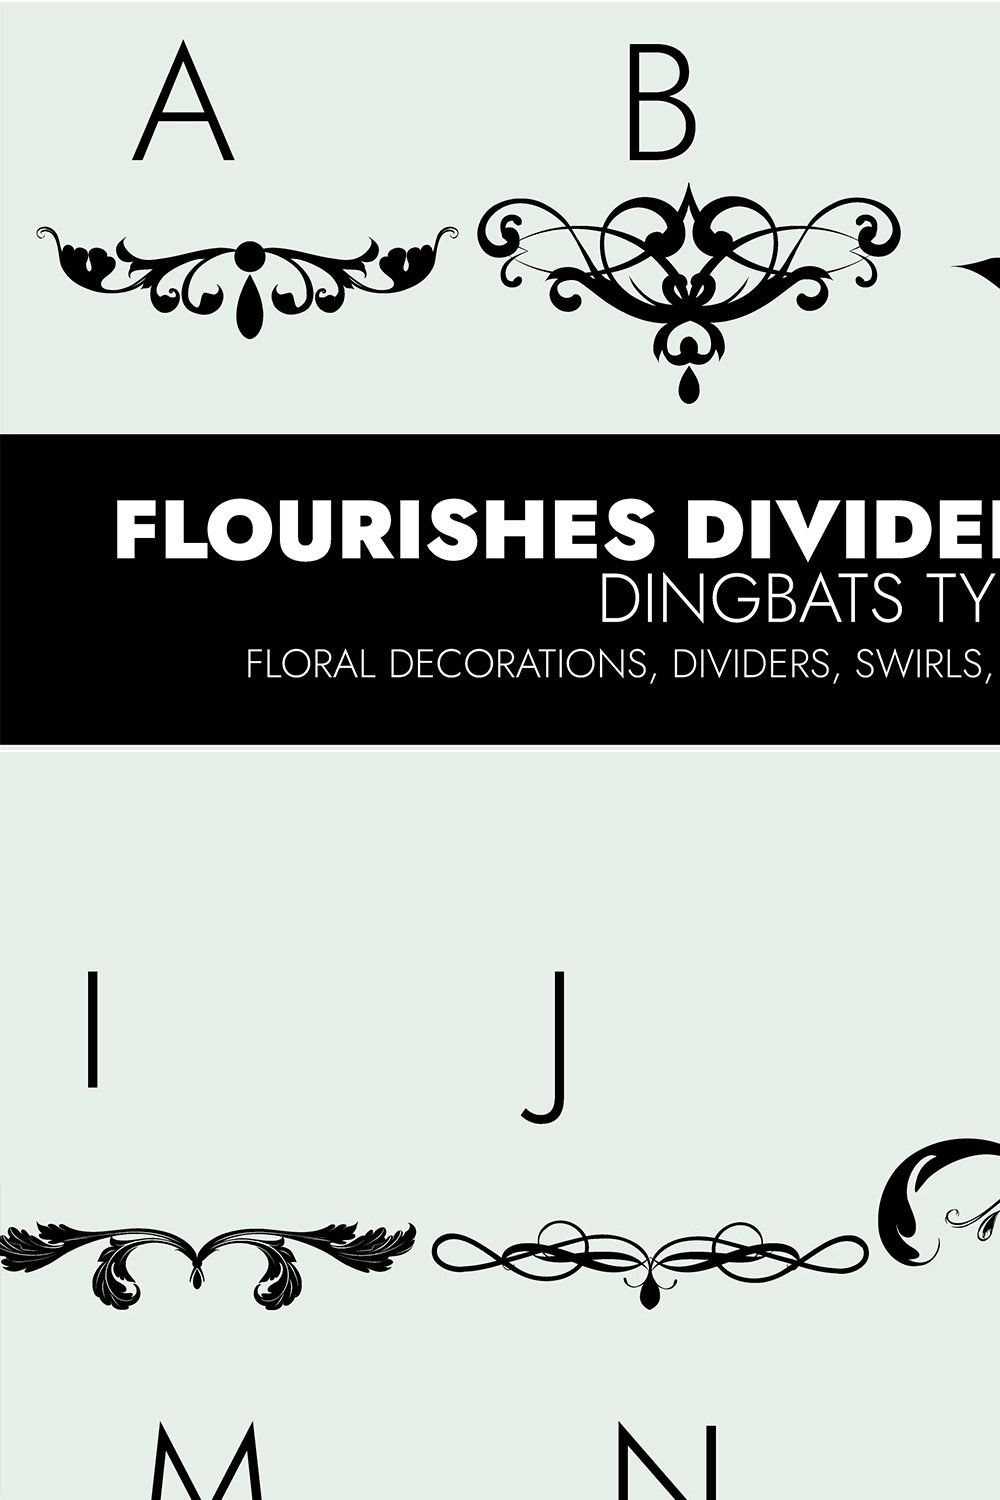 Flourishes Dividers &Swirls Dingbats pinterest preview image.